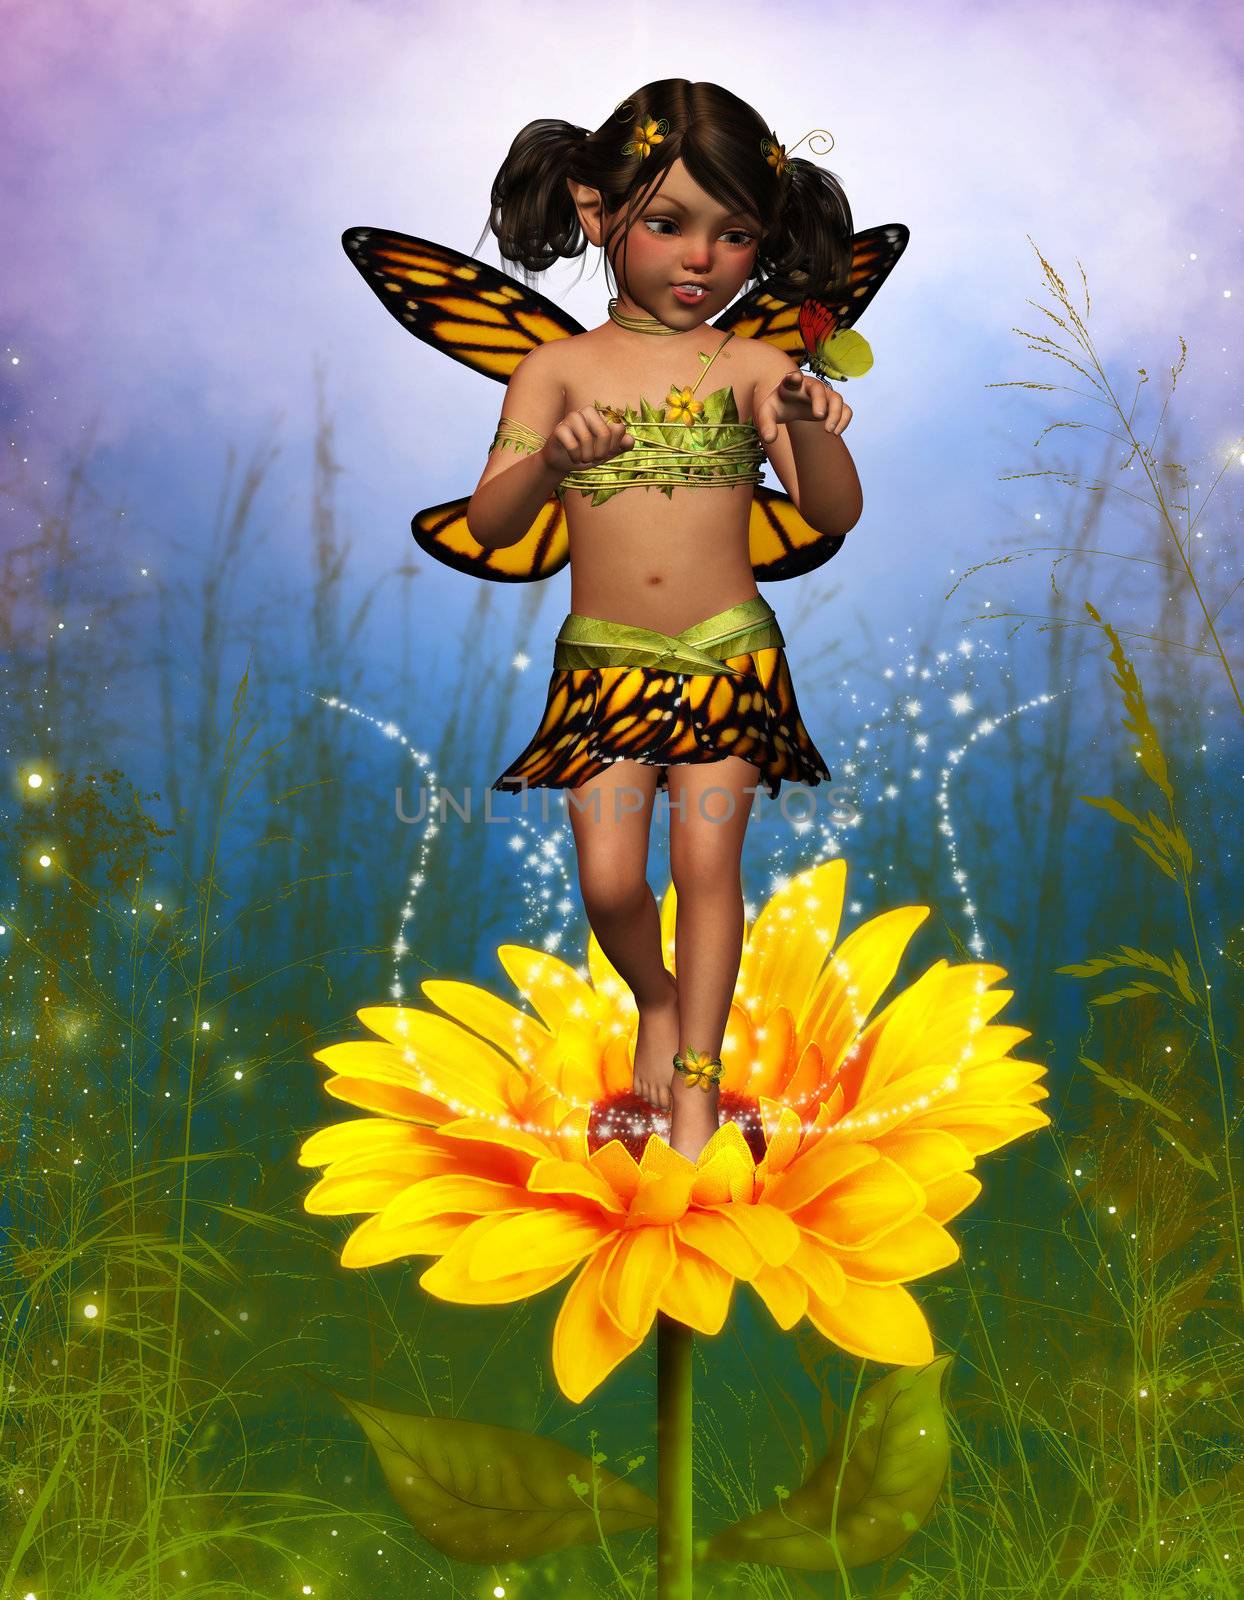 A butterfly fairy on a sunflower